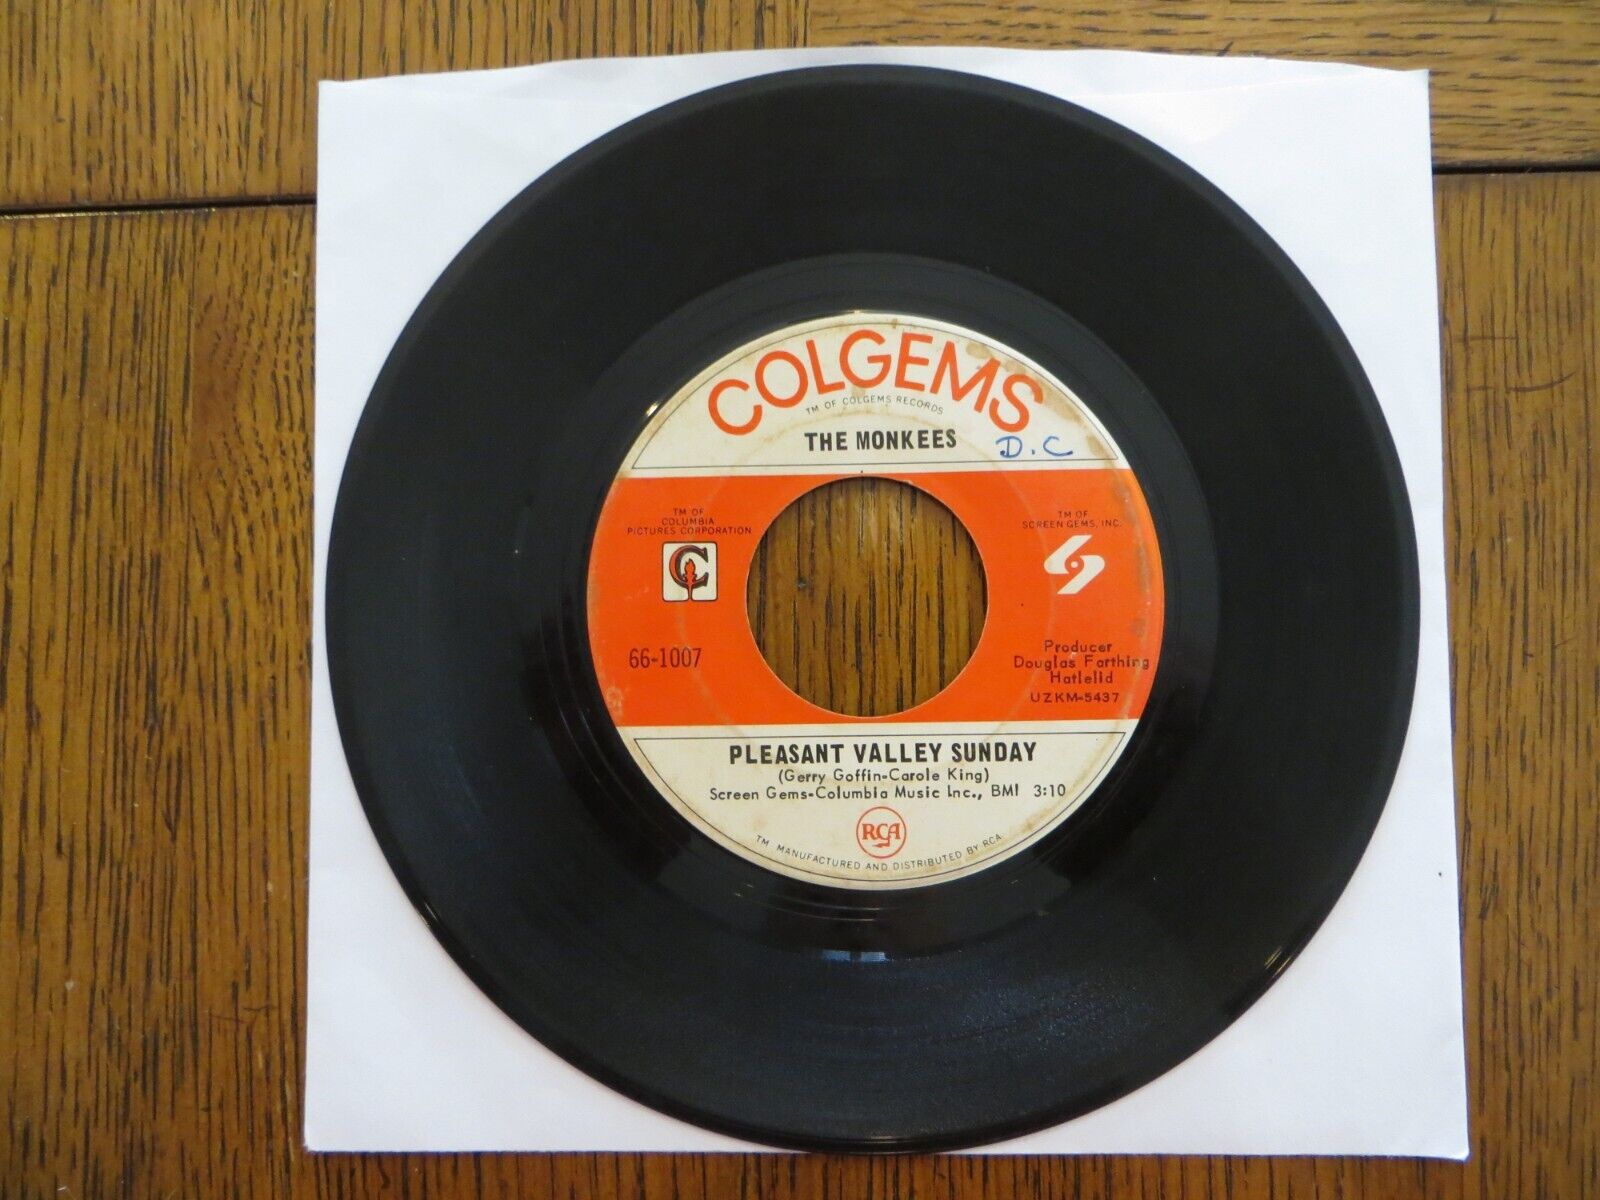 Monkees – Pleasant Valley Sunday / Words - 1967 - Colgems 66-1007 7" Single